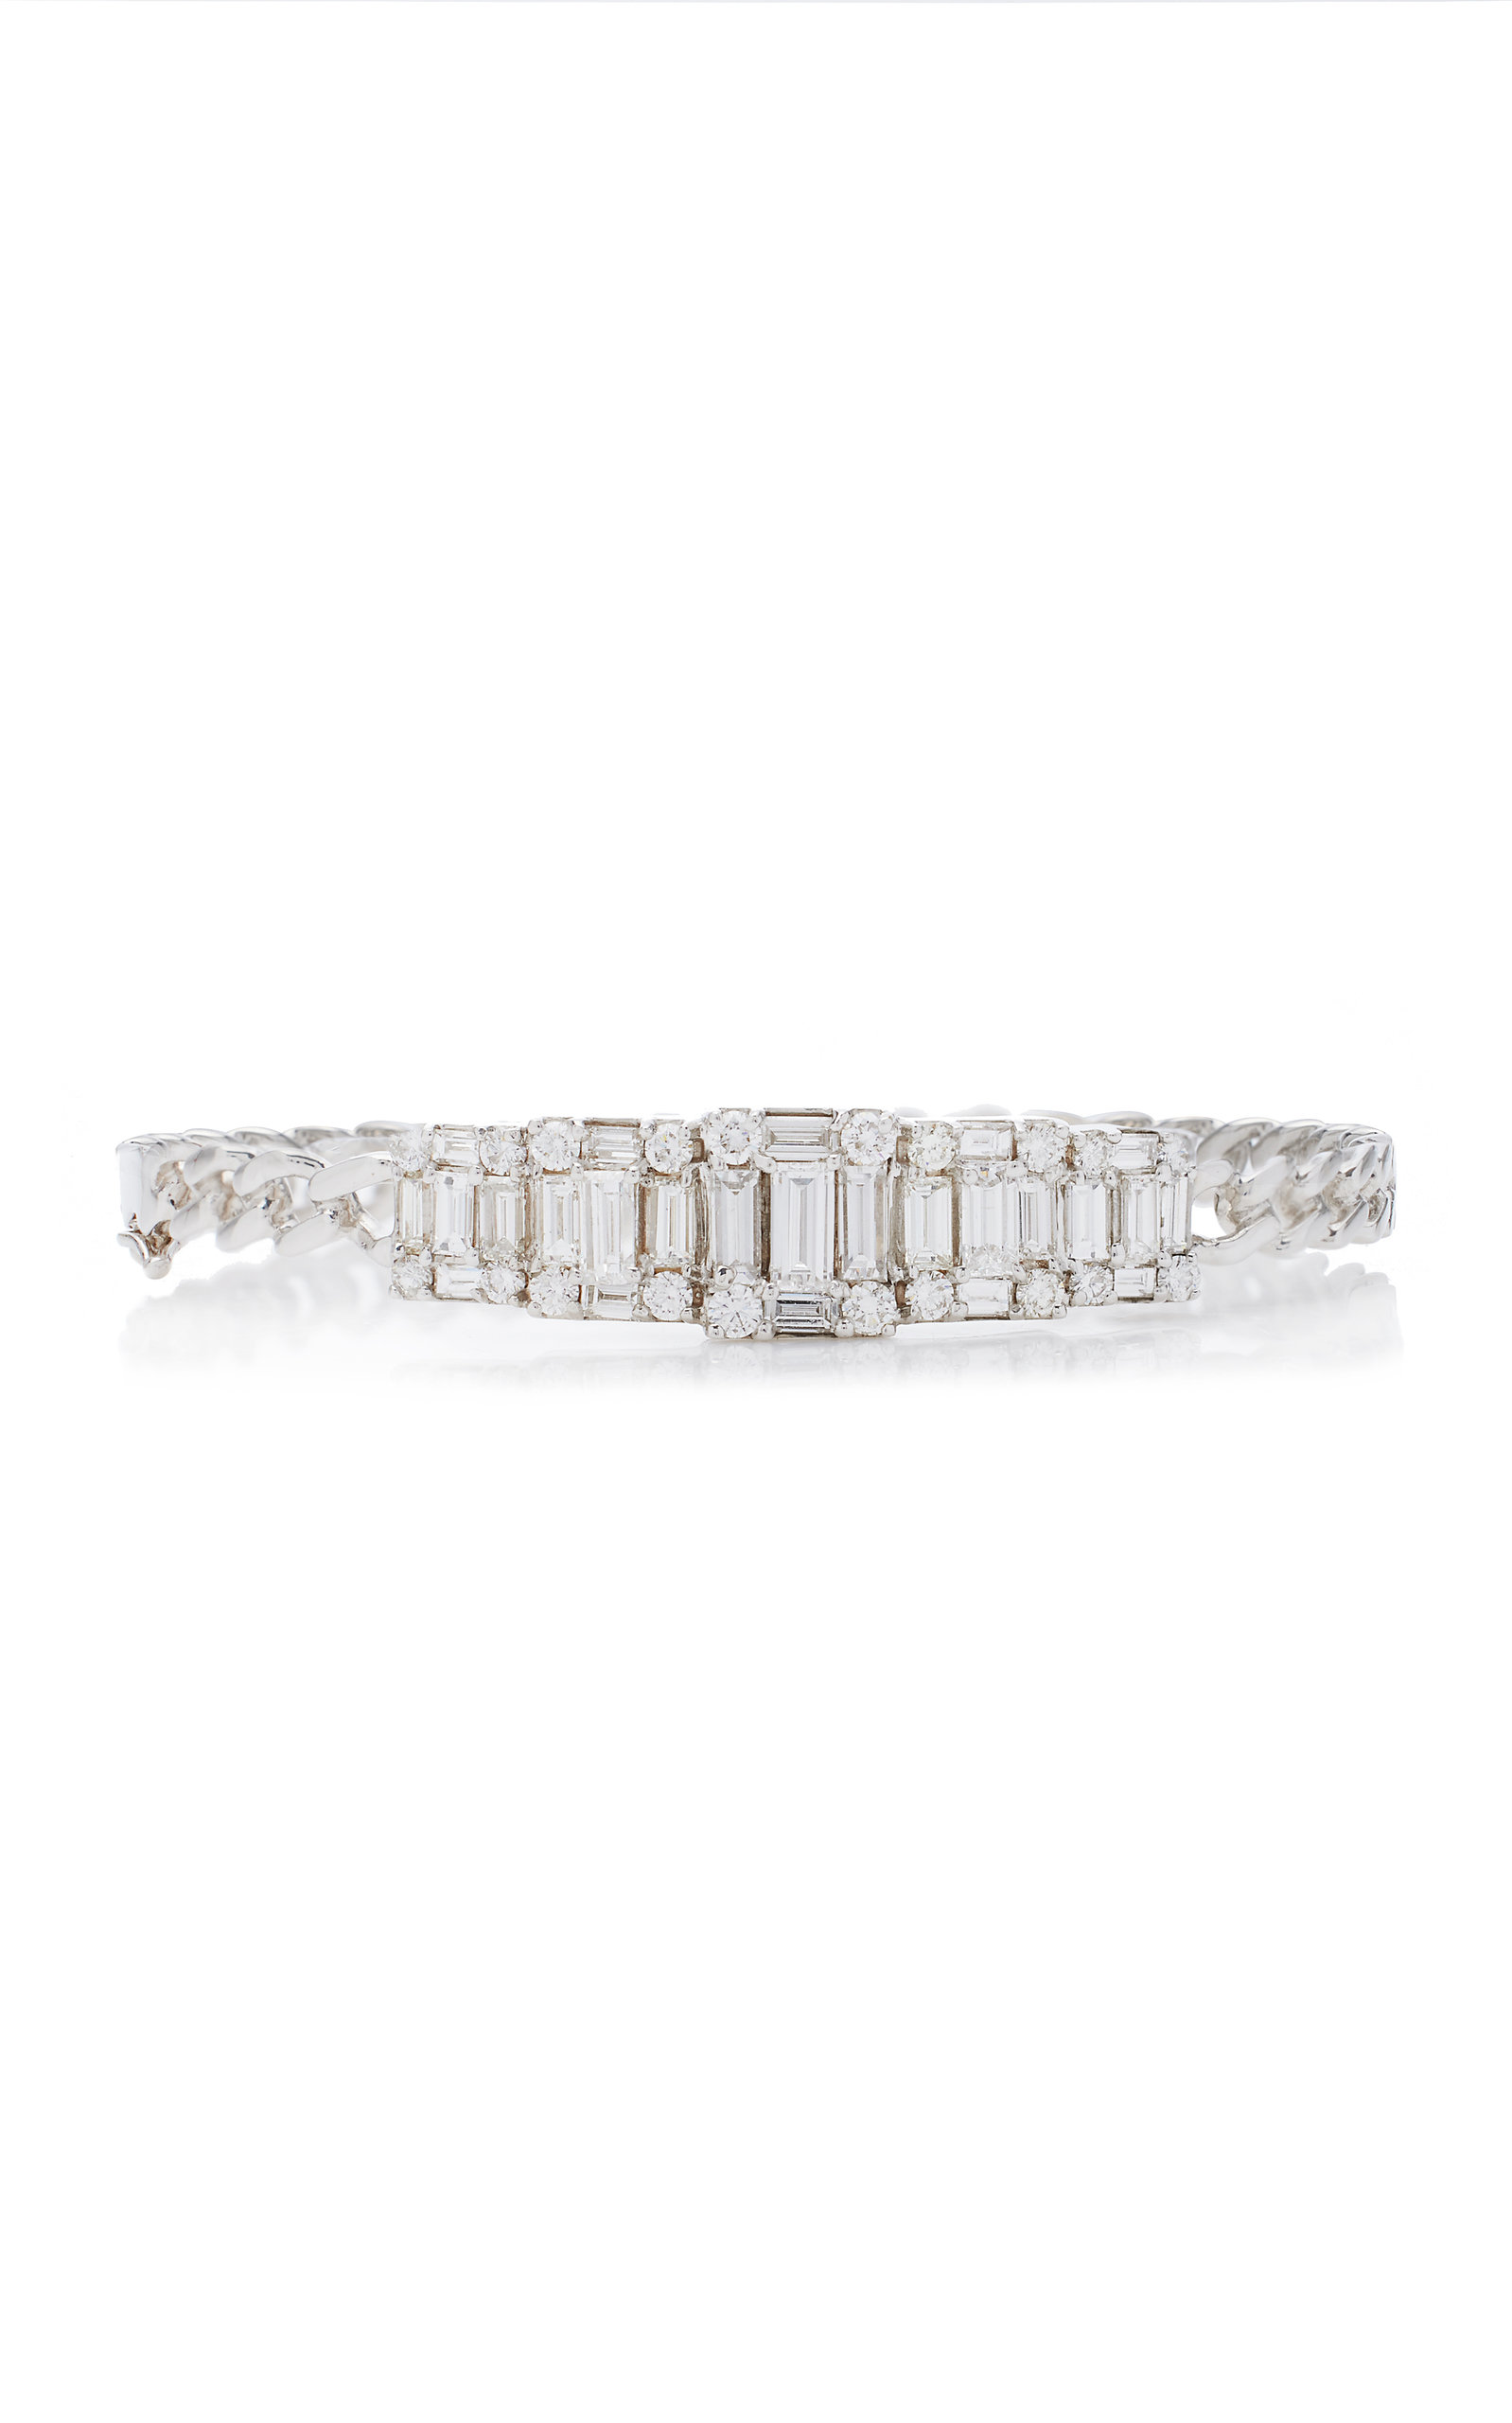 Mindi Mond Clarity 18k White Gold Diamond Chain Bracelet